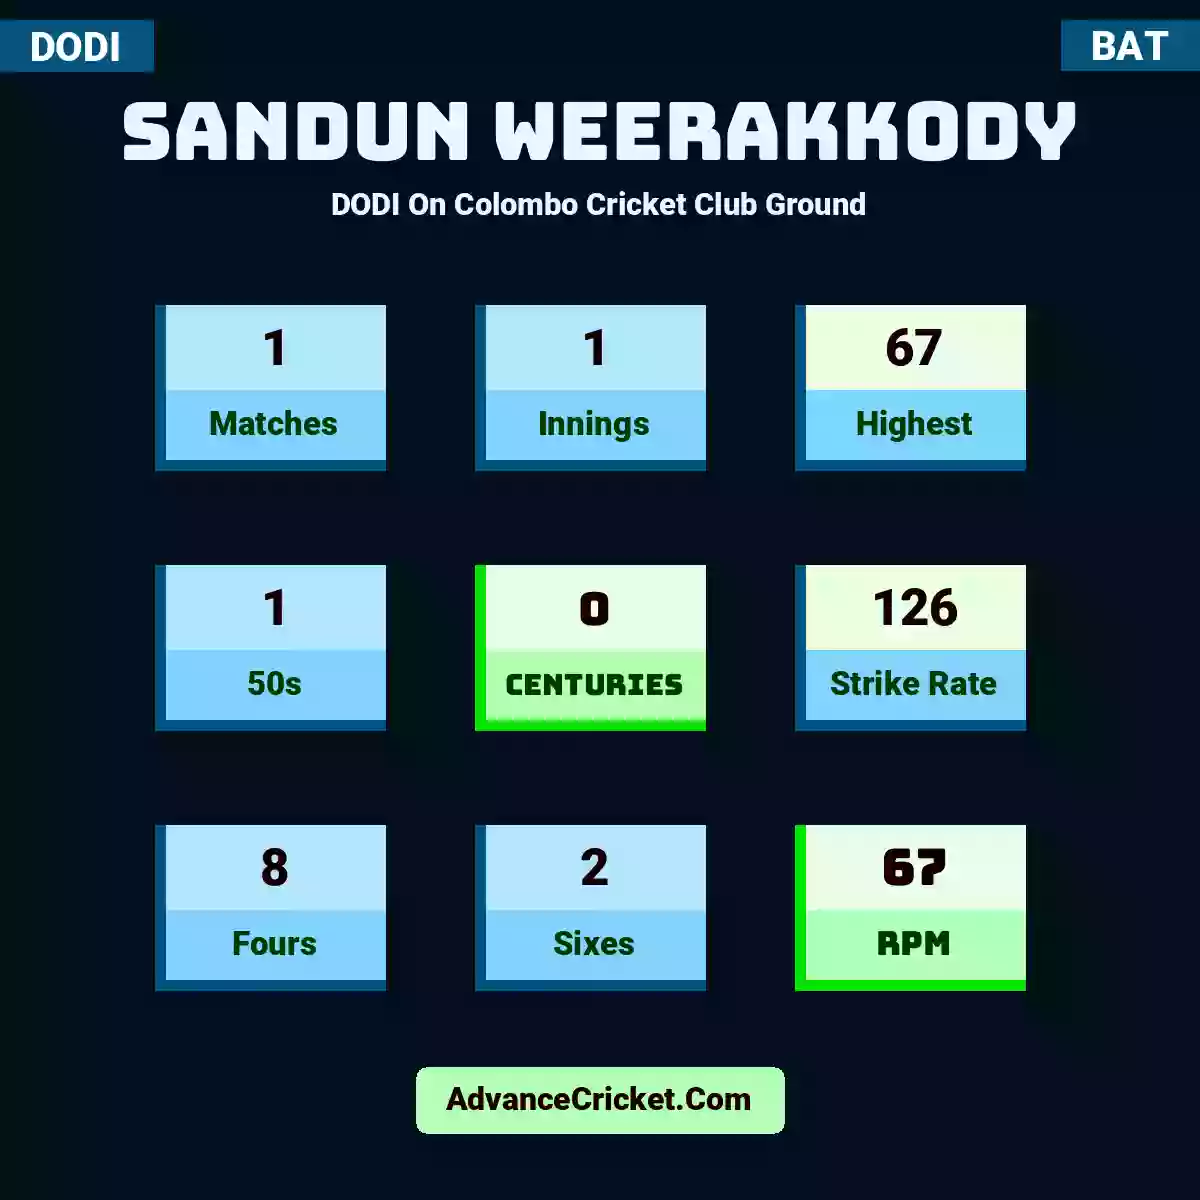 Sandun Weerakkody DODI  On Colombo Cricket Club Ground, Sandun Weerakkody played 1 matches, scored 67 runs as highest, 1 half-centuries, and 0 centuries, with a strike rate of 126. S.Weerakkody hit 8 fours and 2 sixes, with an RPM of 67.